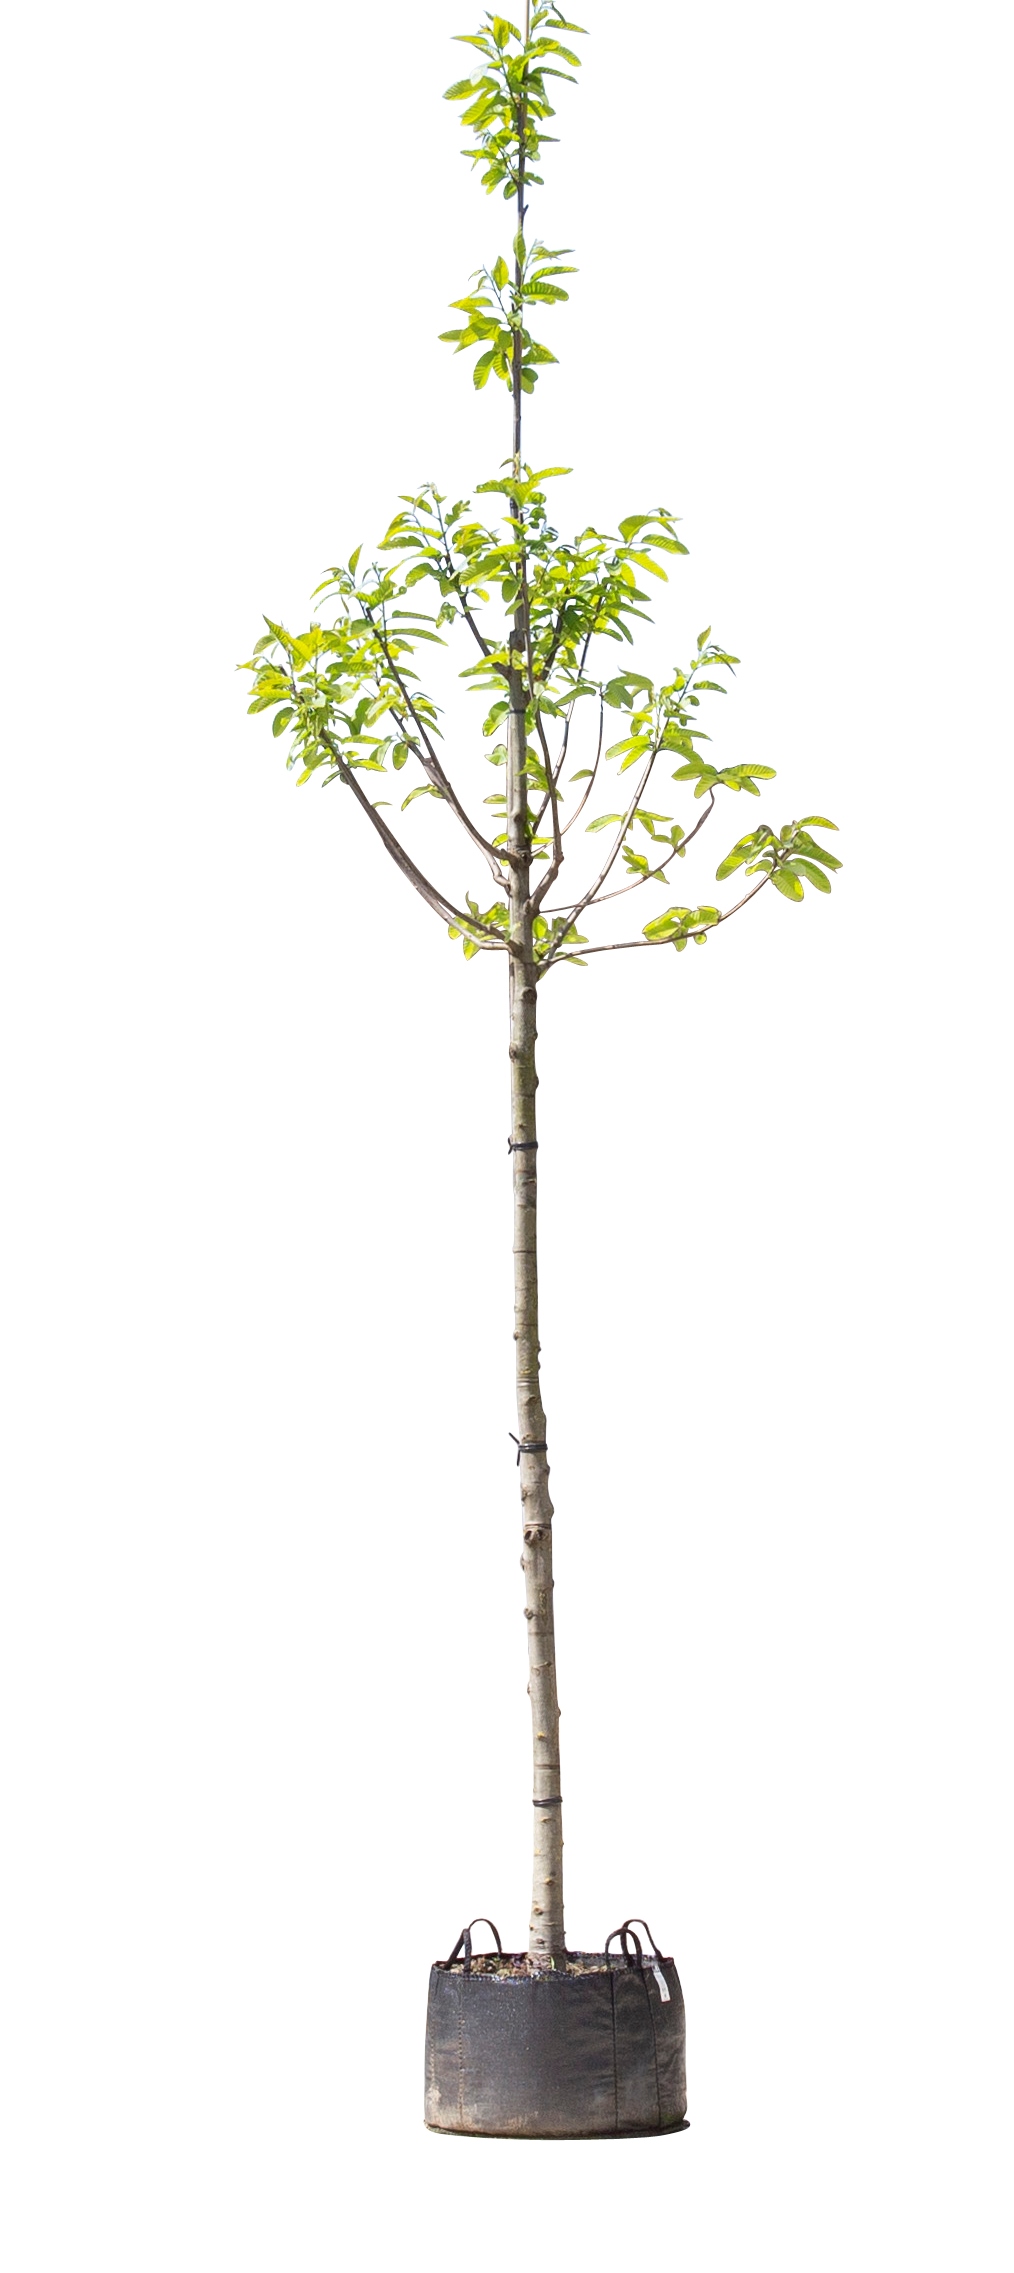 Tamme kastanje boom - Castanea sativa 400 - 500 cm totaalhoogte (14 - 18 cm stamomtrek)